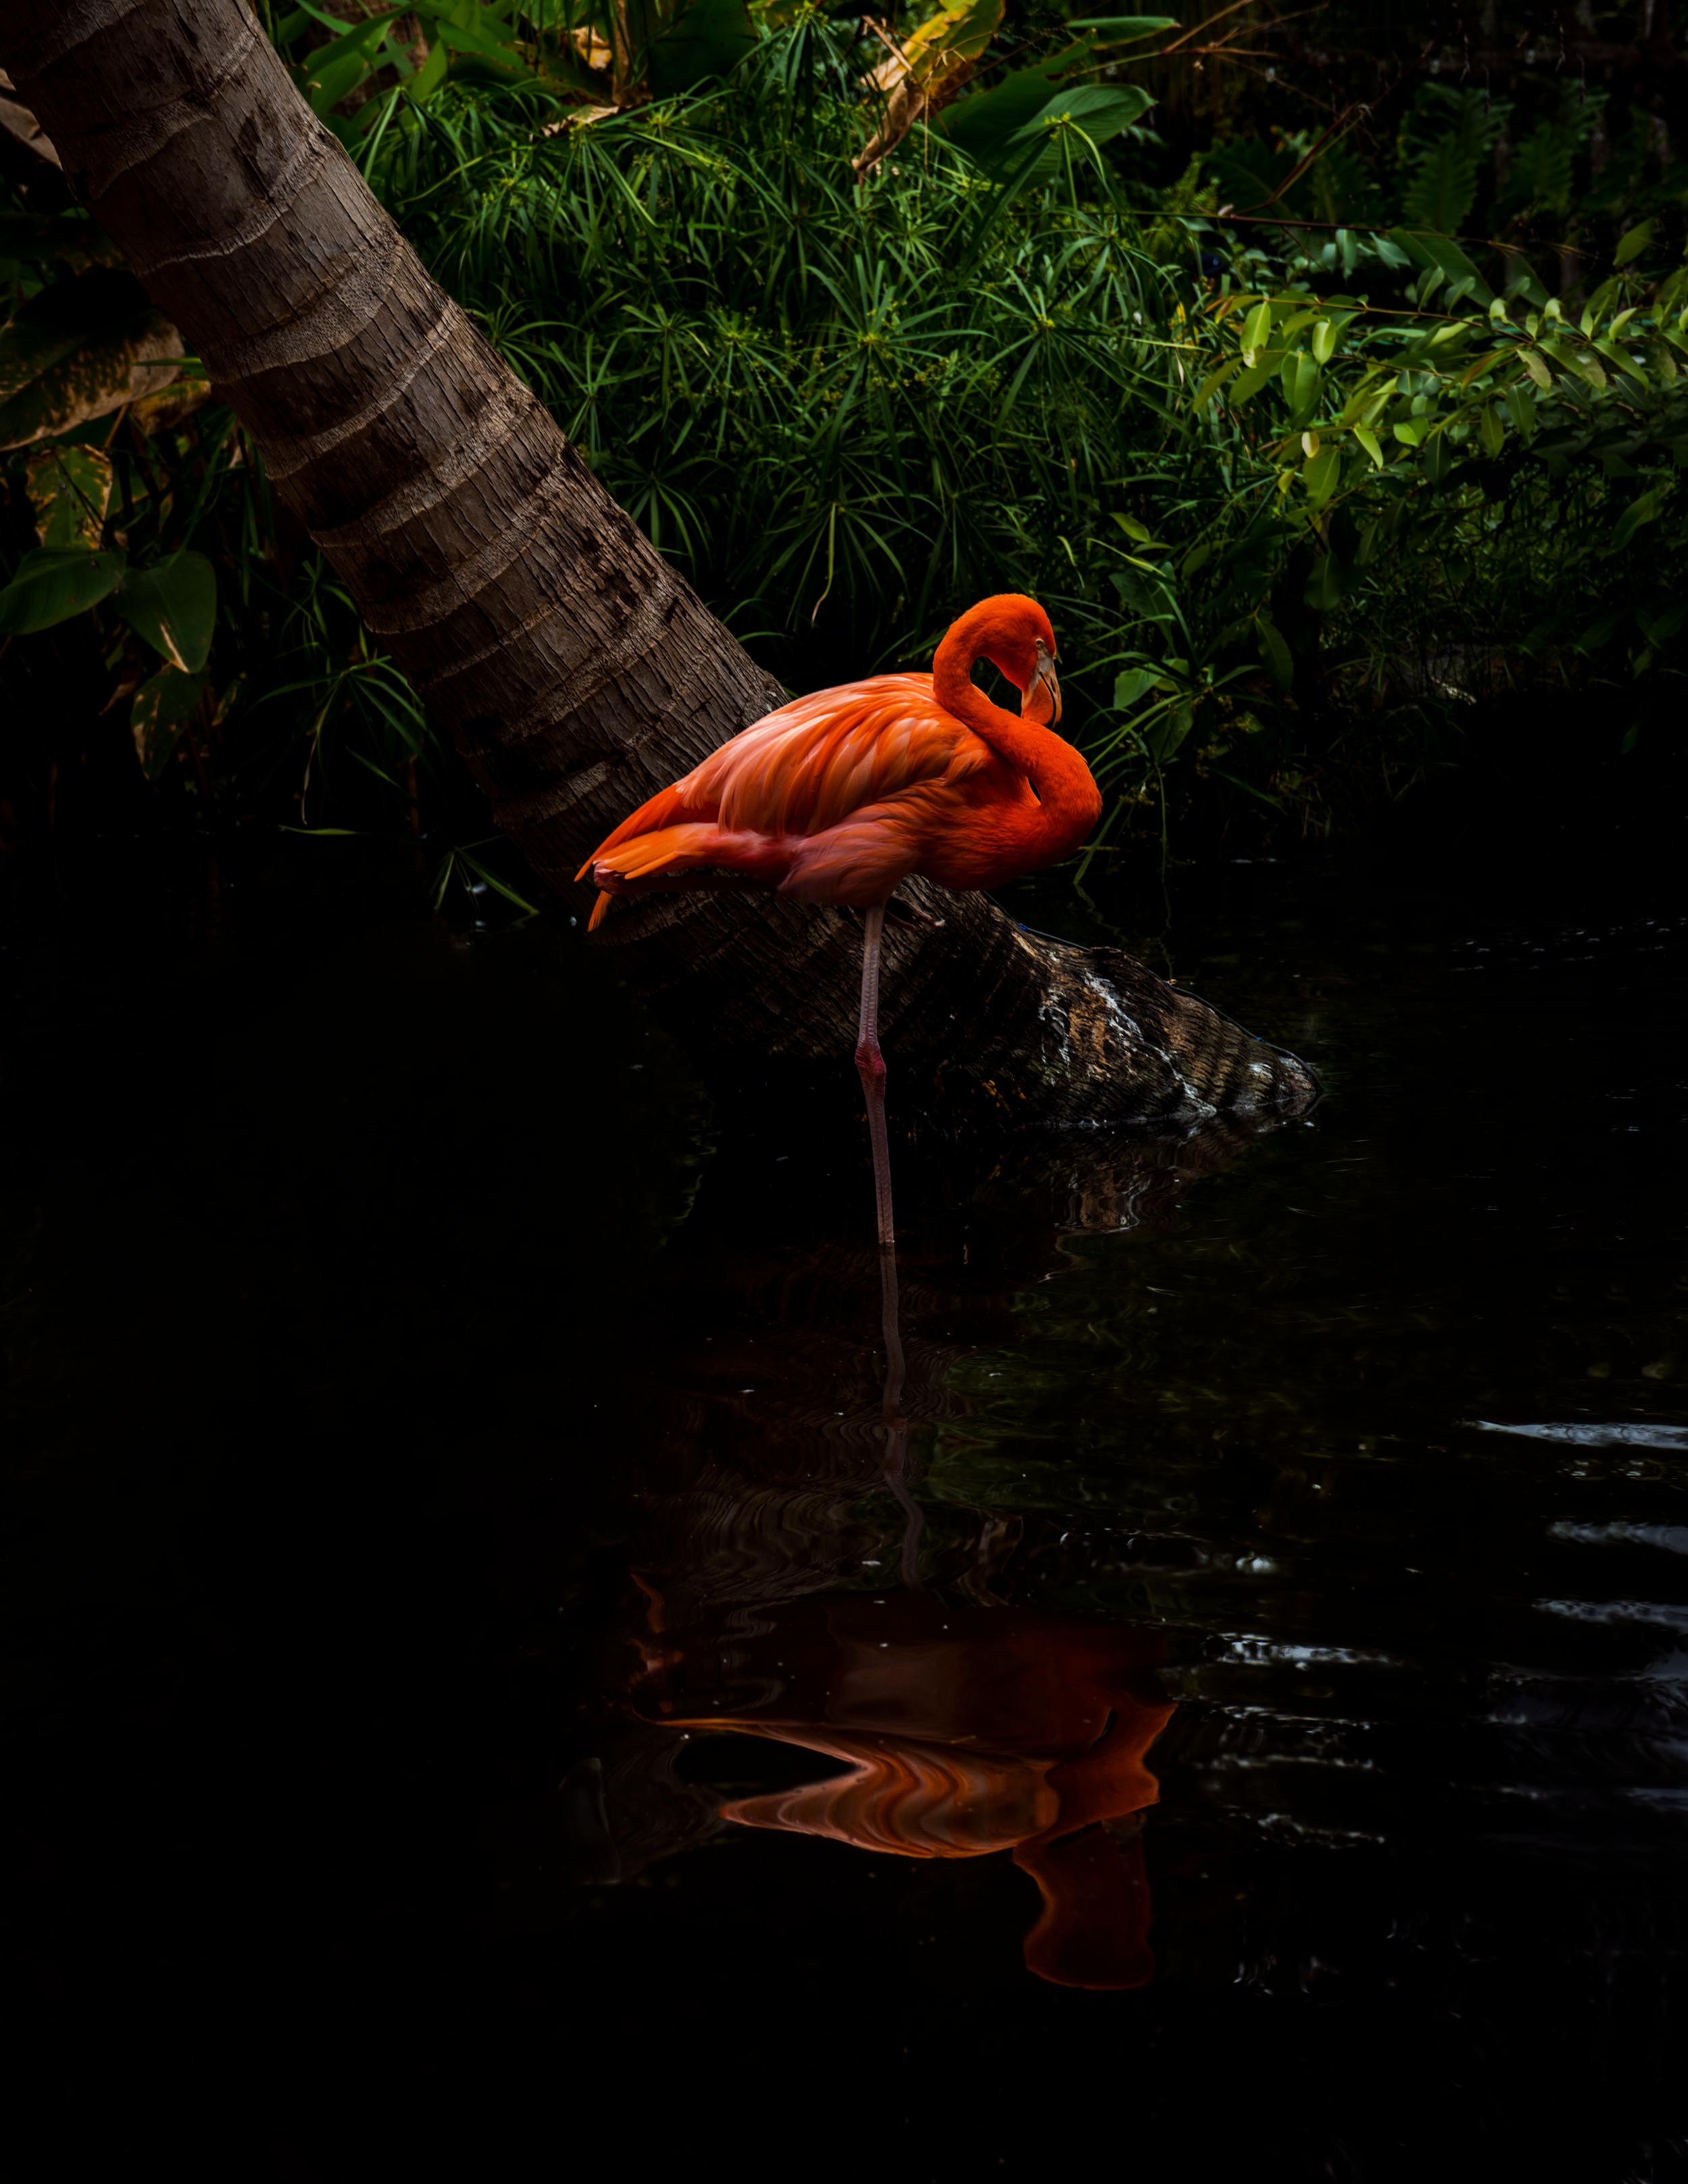 flamingo.png